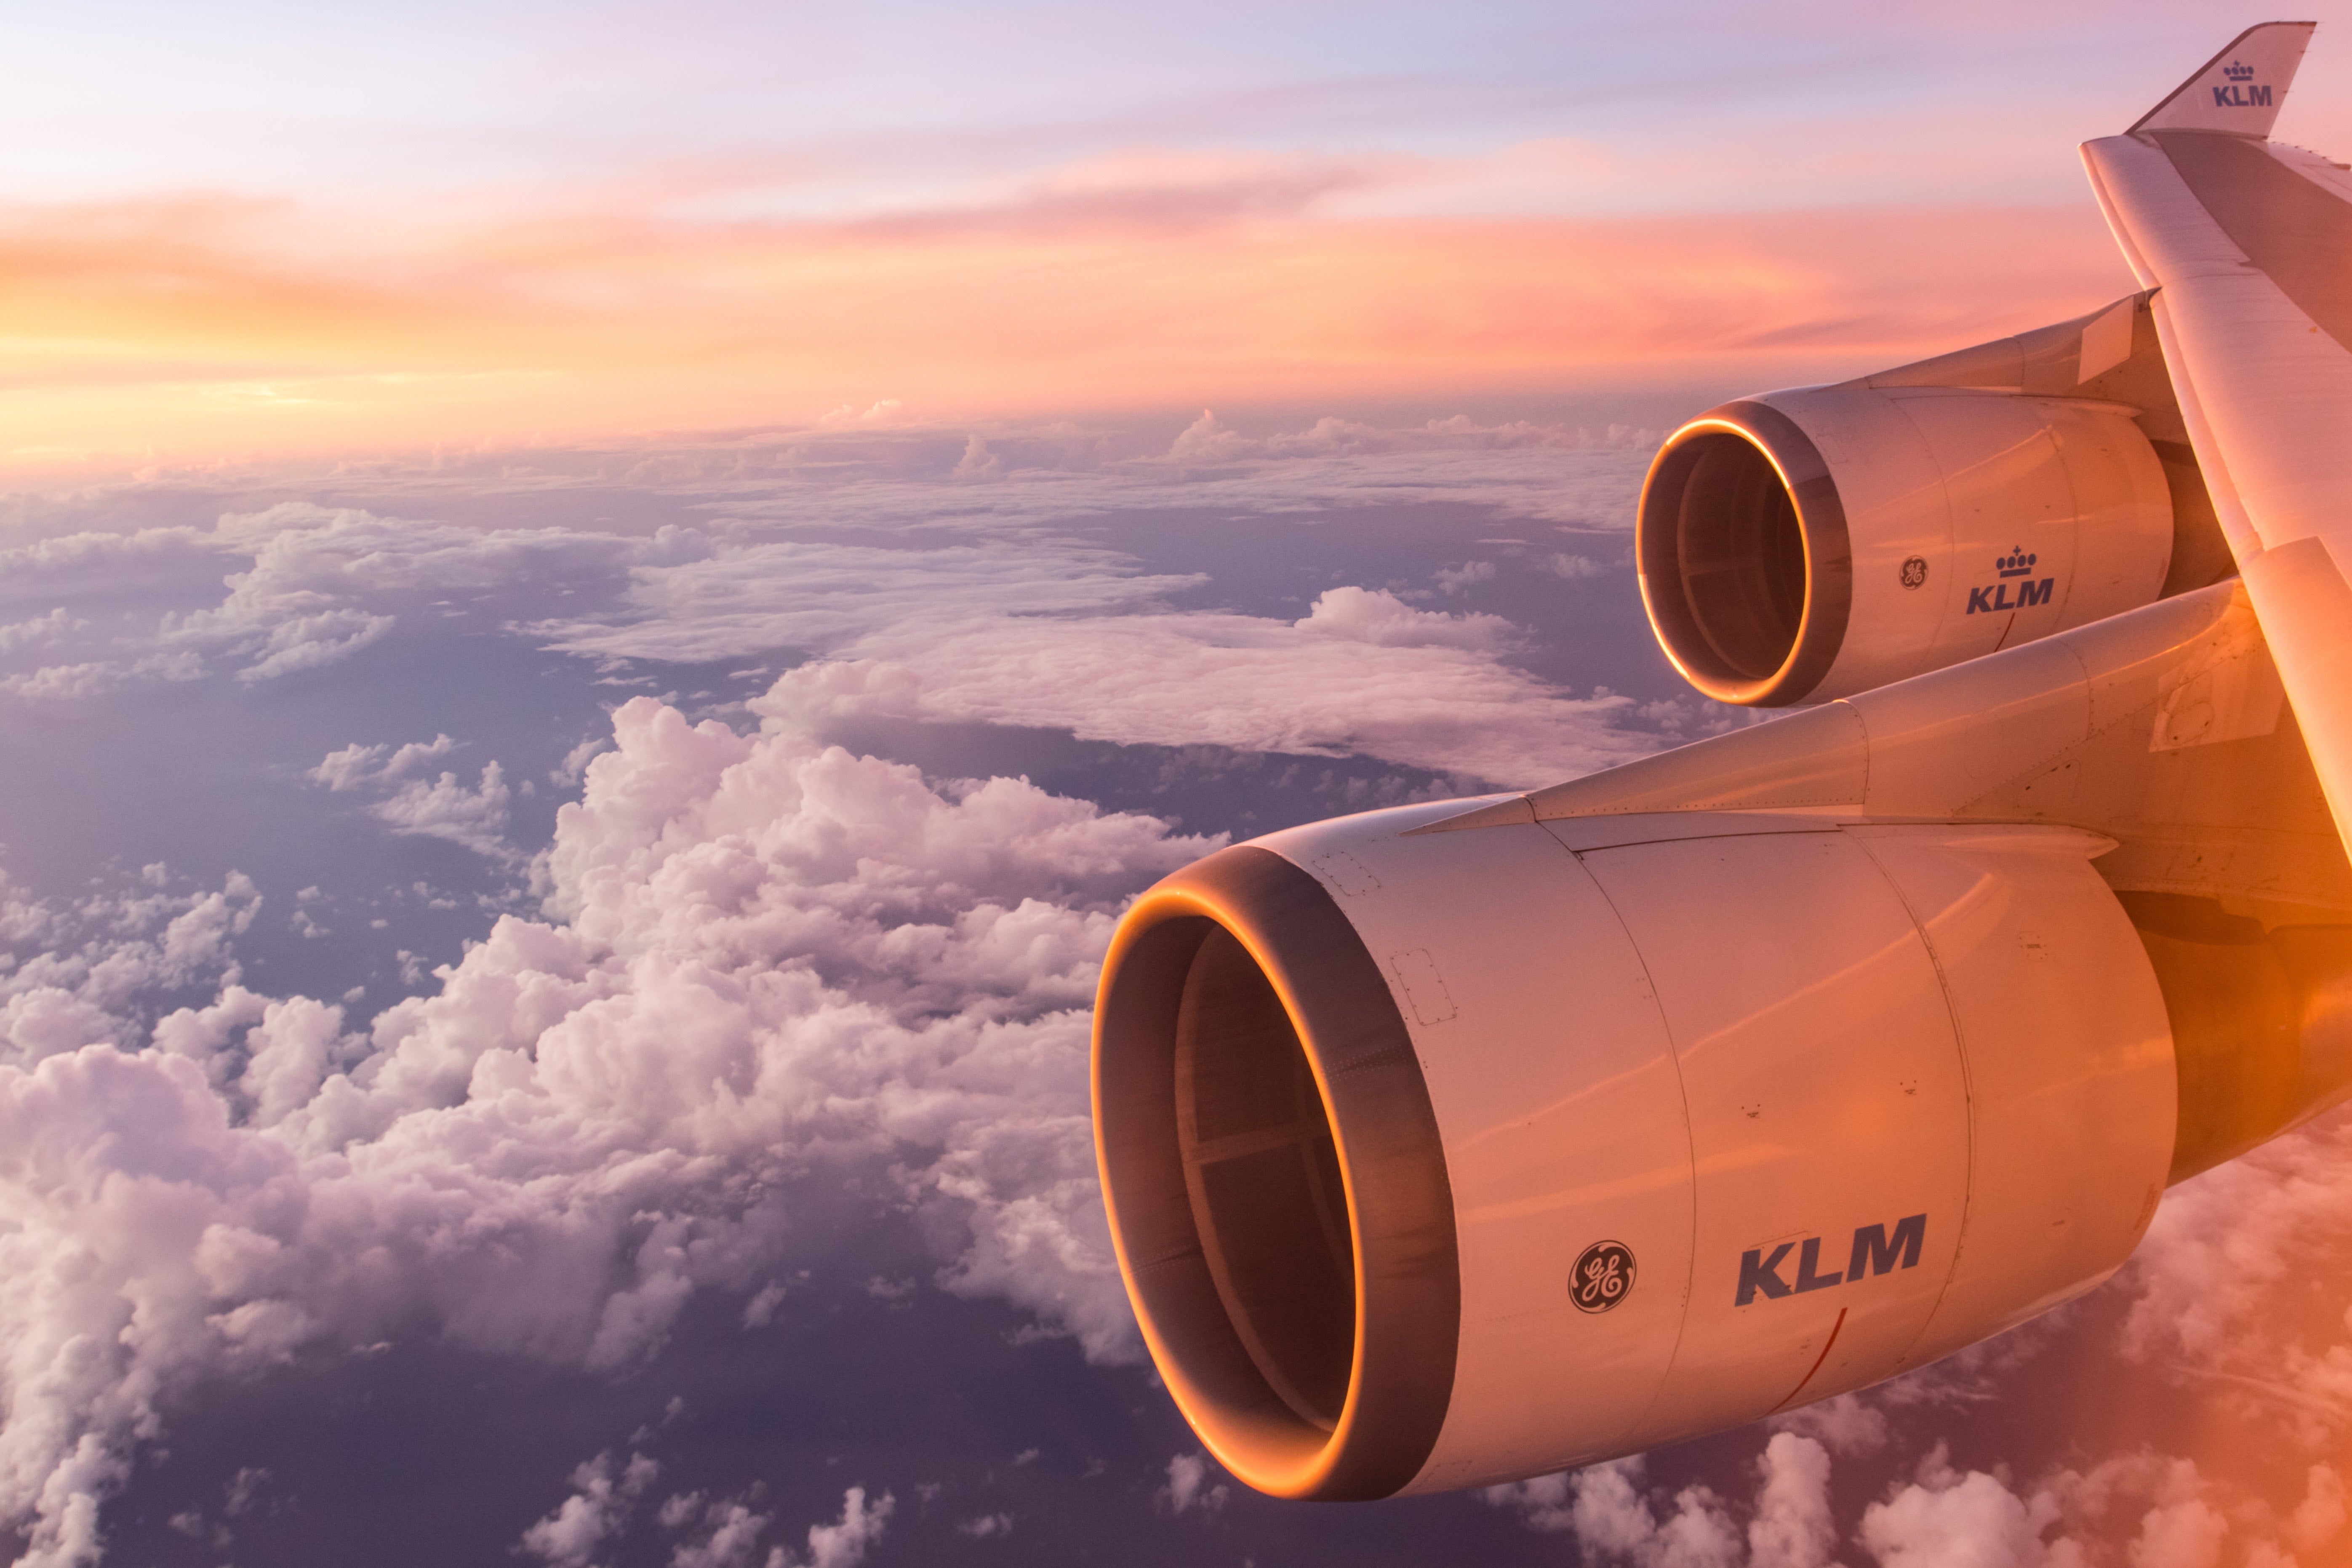 A beautiful window shot out of a KLM flight